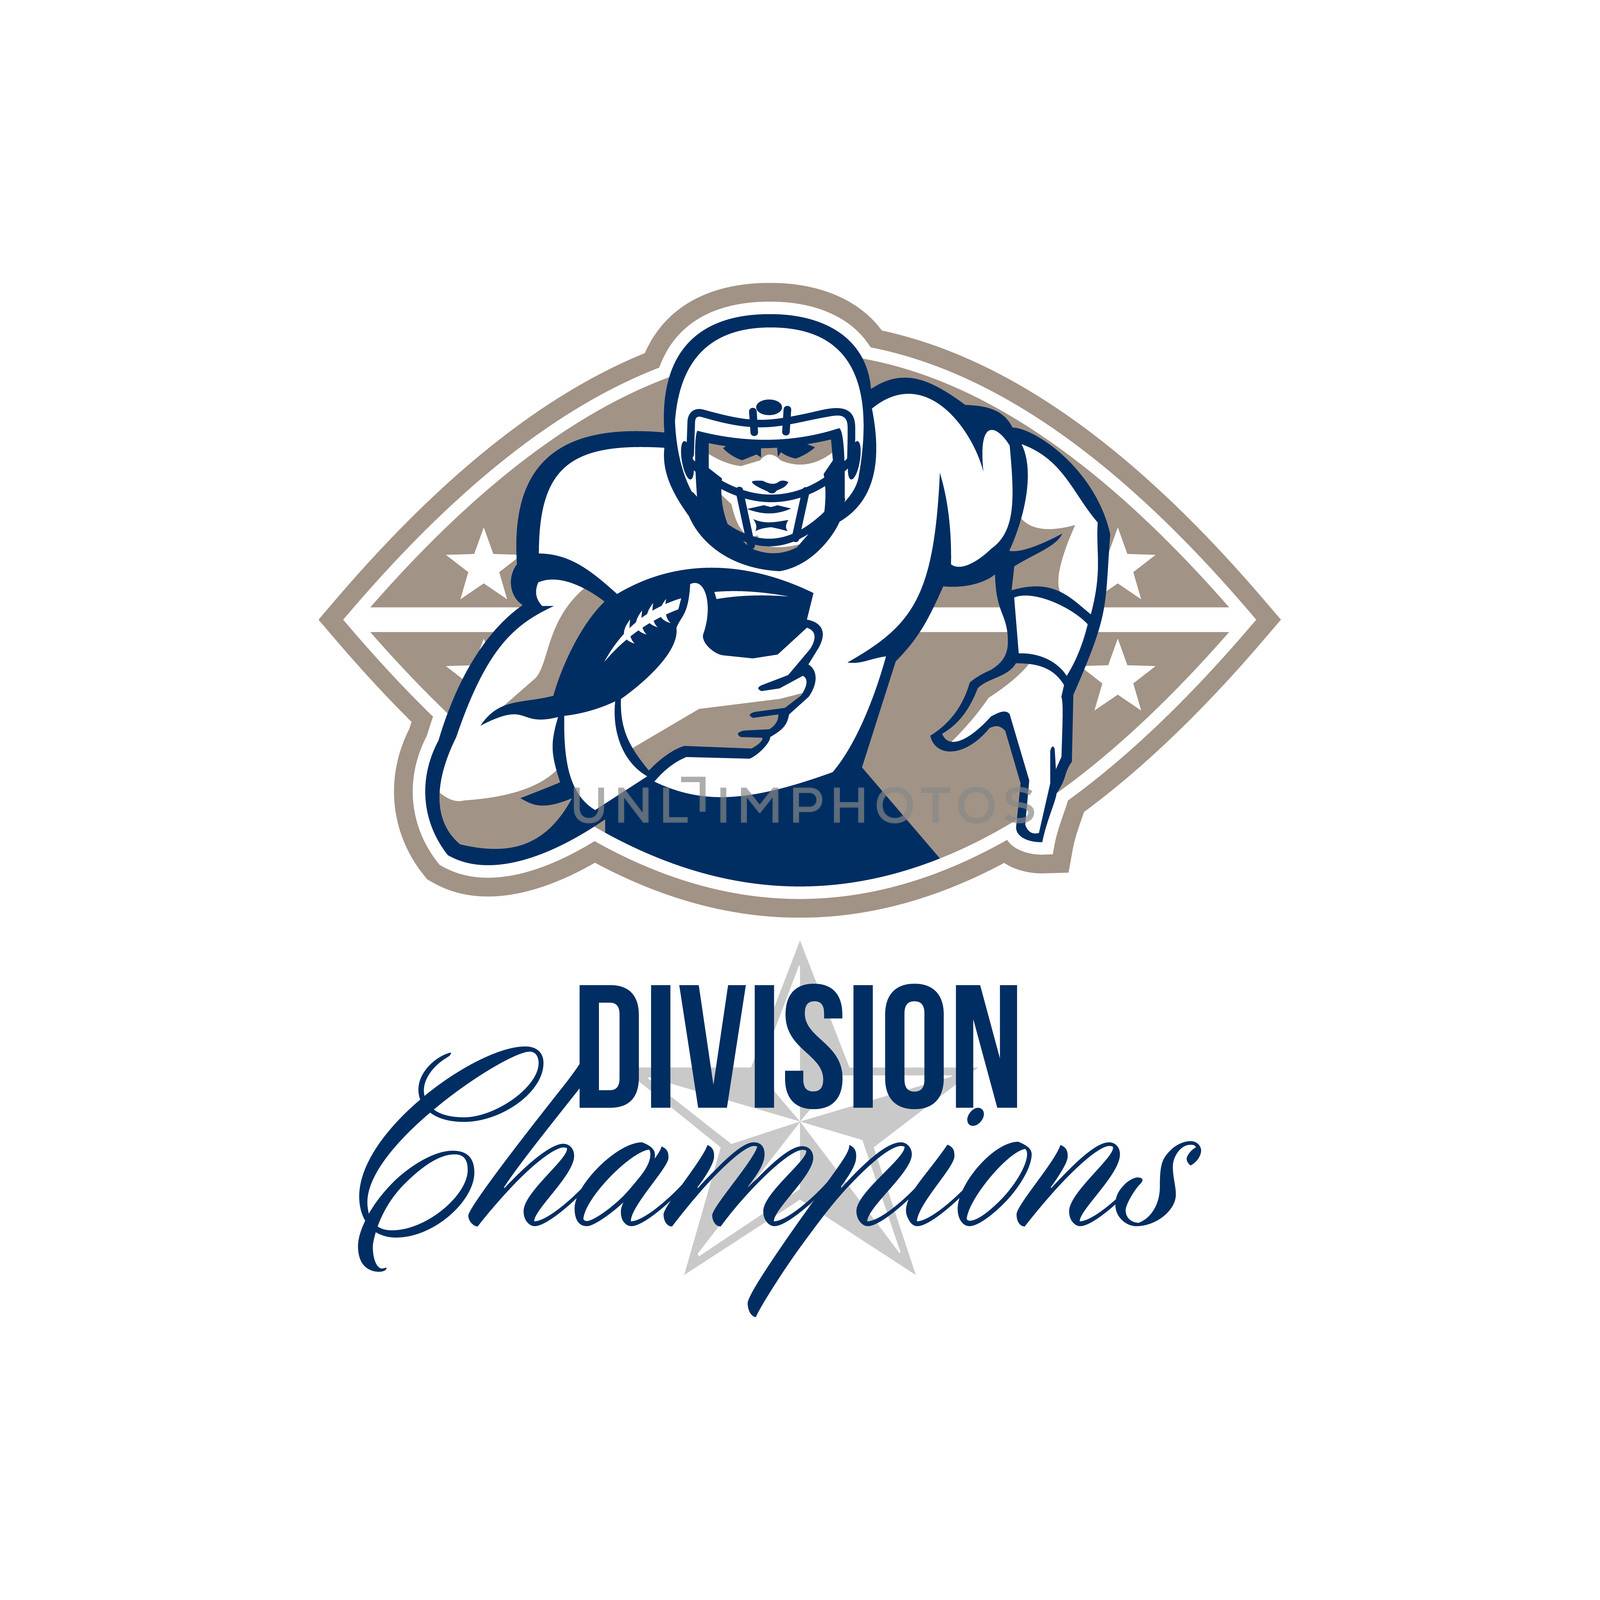 American Football Runningback Division Champions by patrimonio